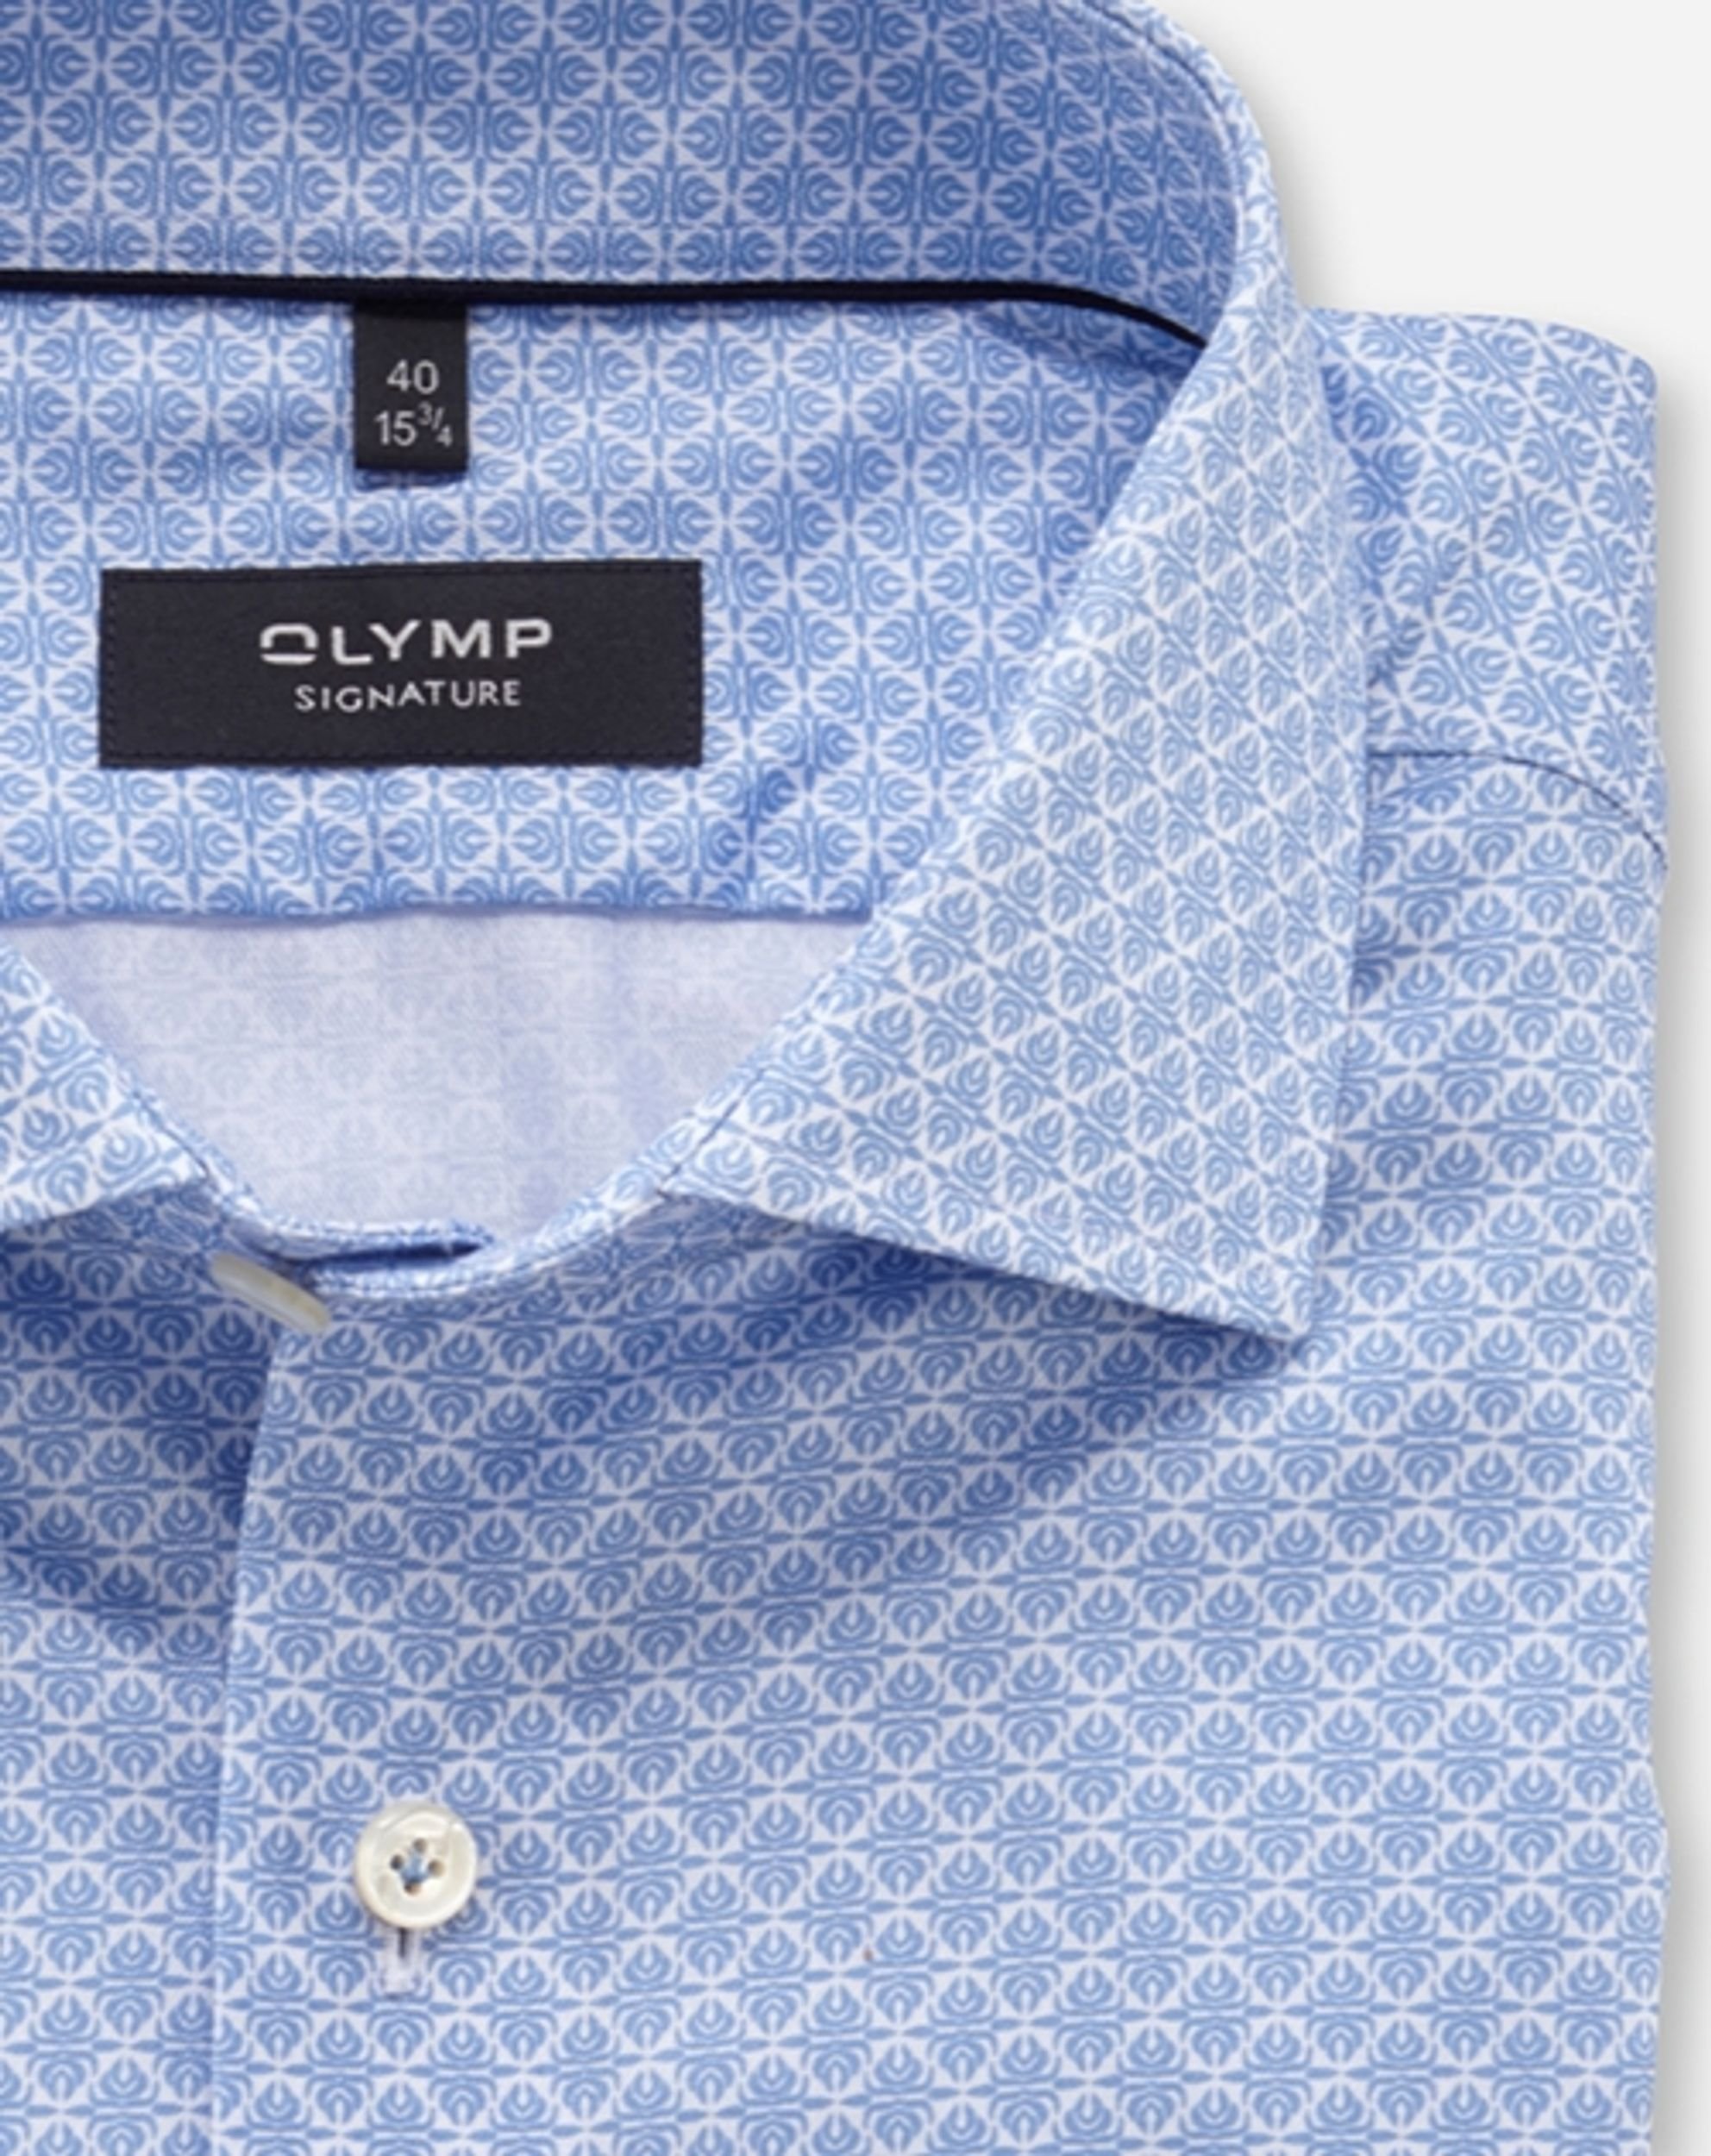 Olymp Signature Hemd Tailored Fit